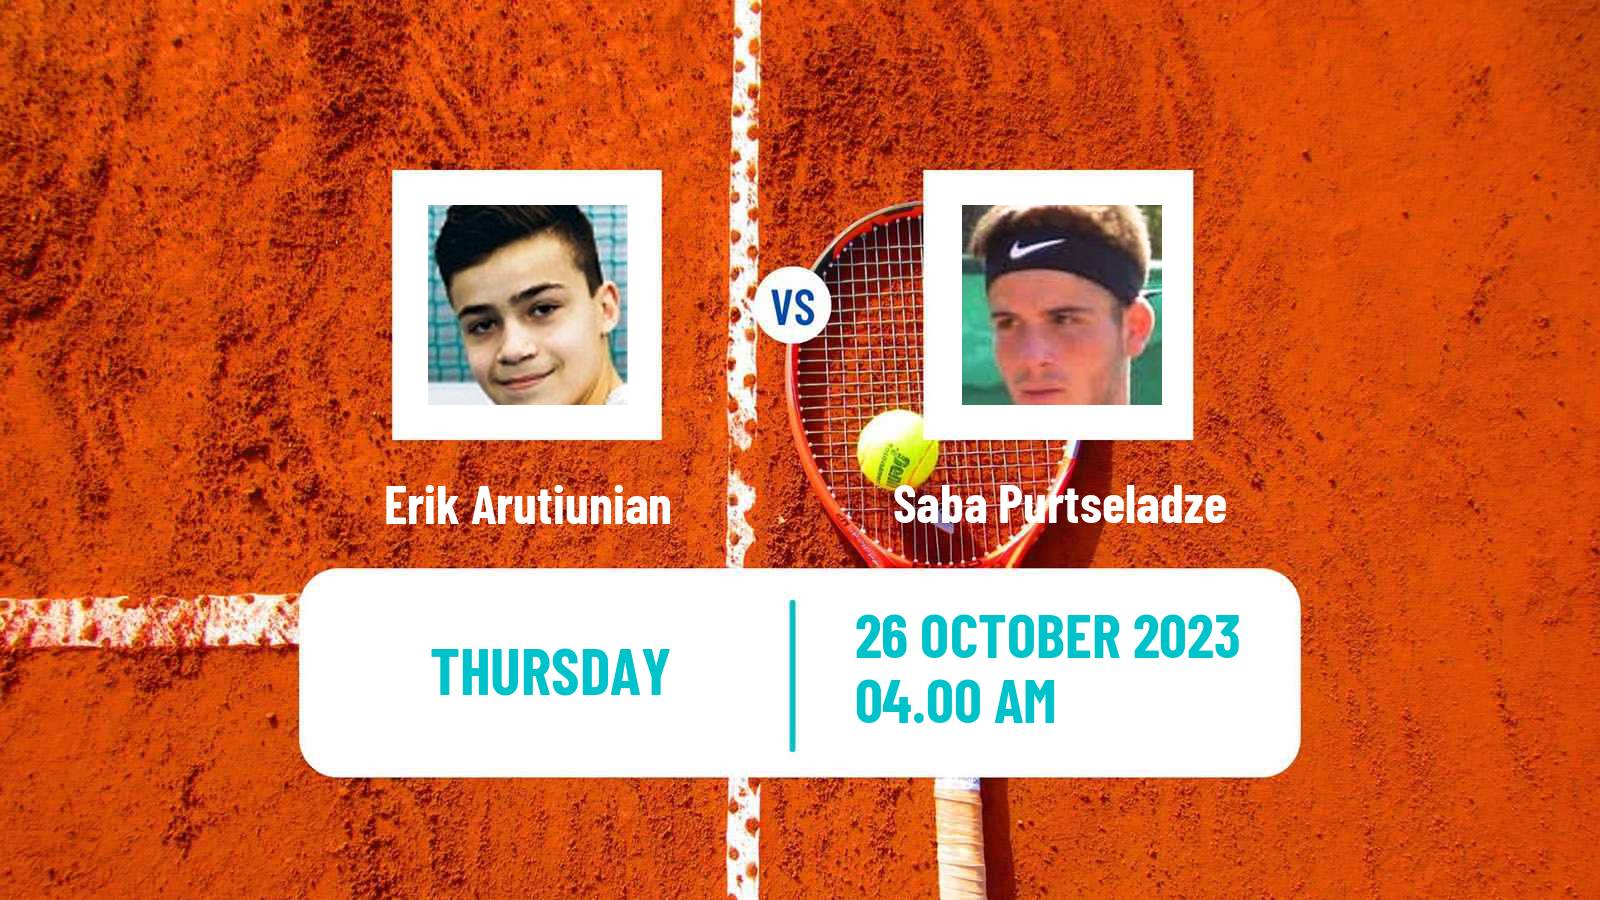 Tennis ITF M15 Sharm Elsheikh 15 Men Erik Arutiunian - Saba Purtseladze